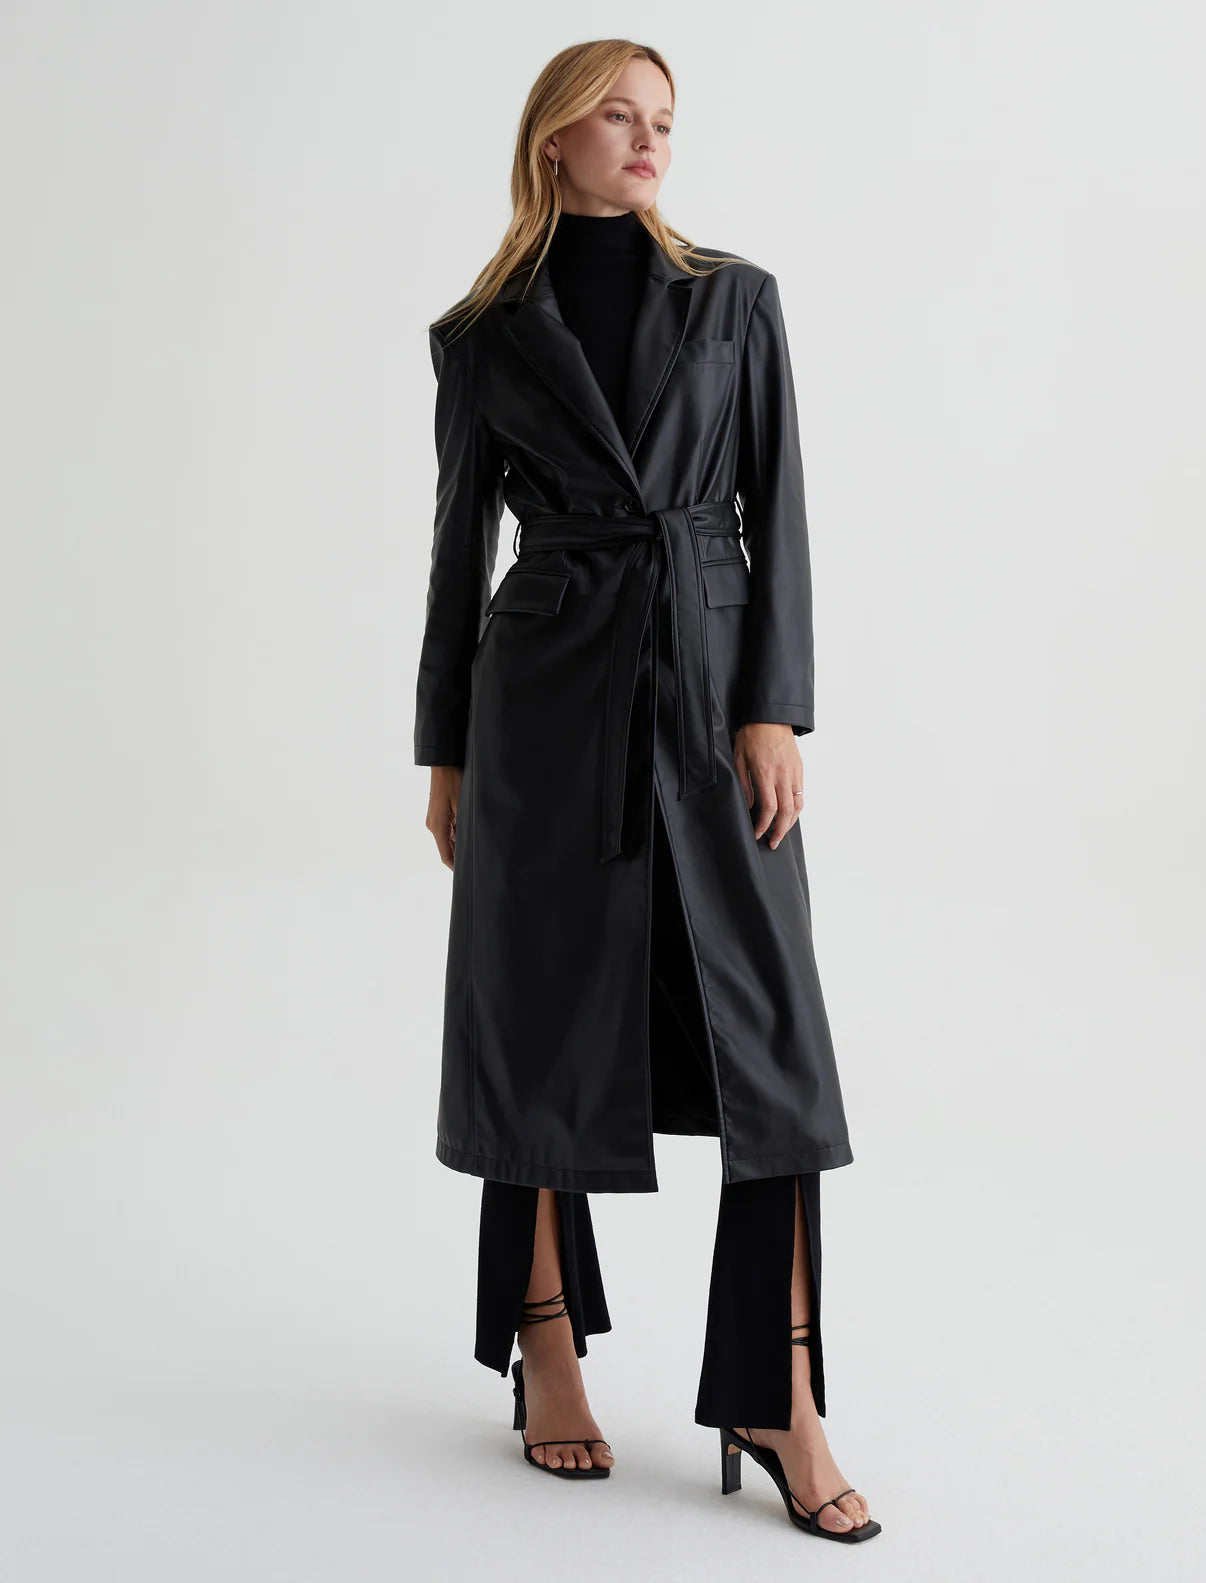 Valentina Black Faux Leather Coat